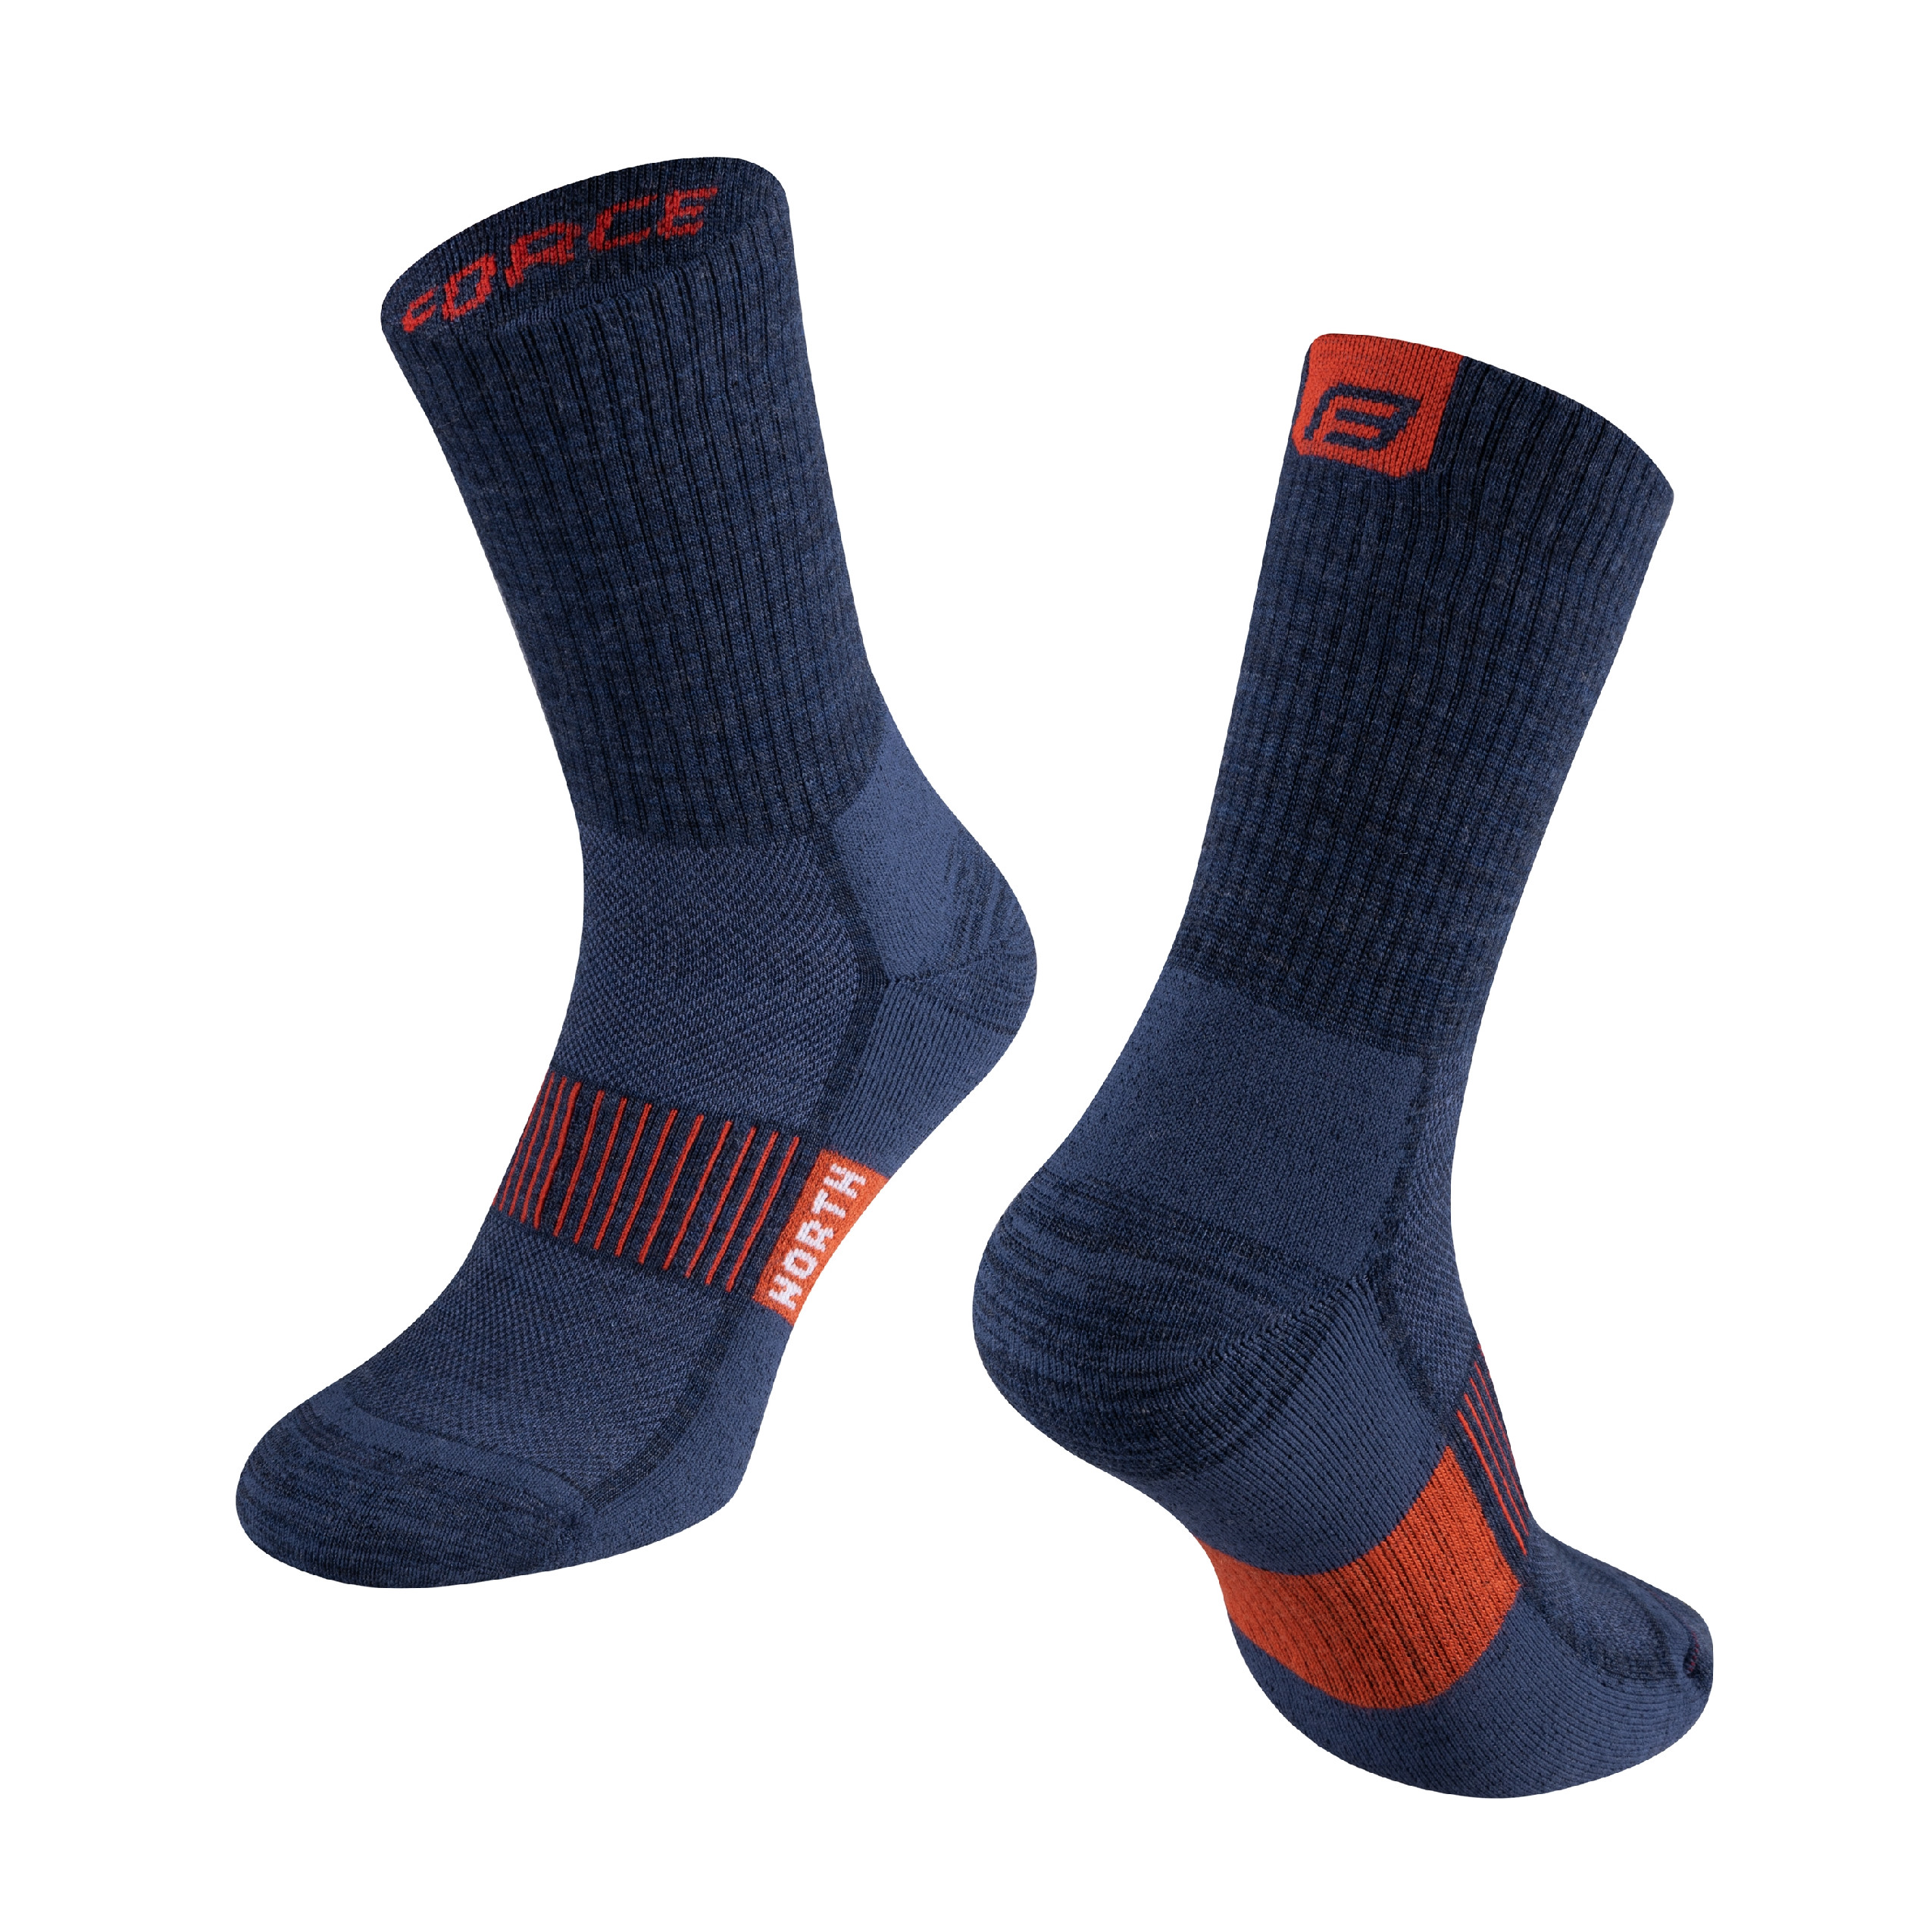 ponožky FORCE NORTH termo,modro-oranžové S-M/36-41 Velikost: S-M